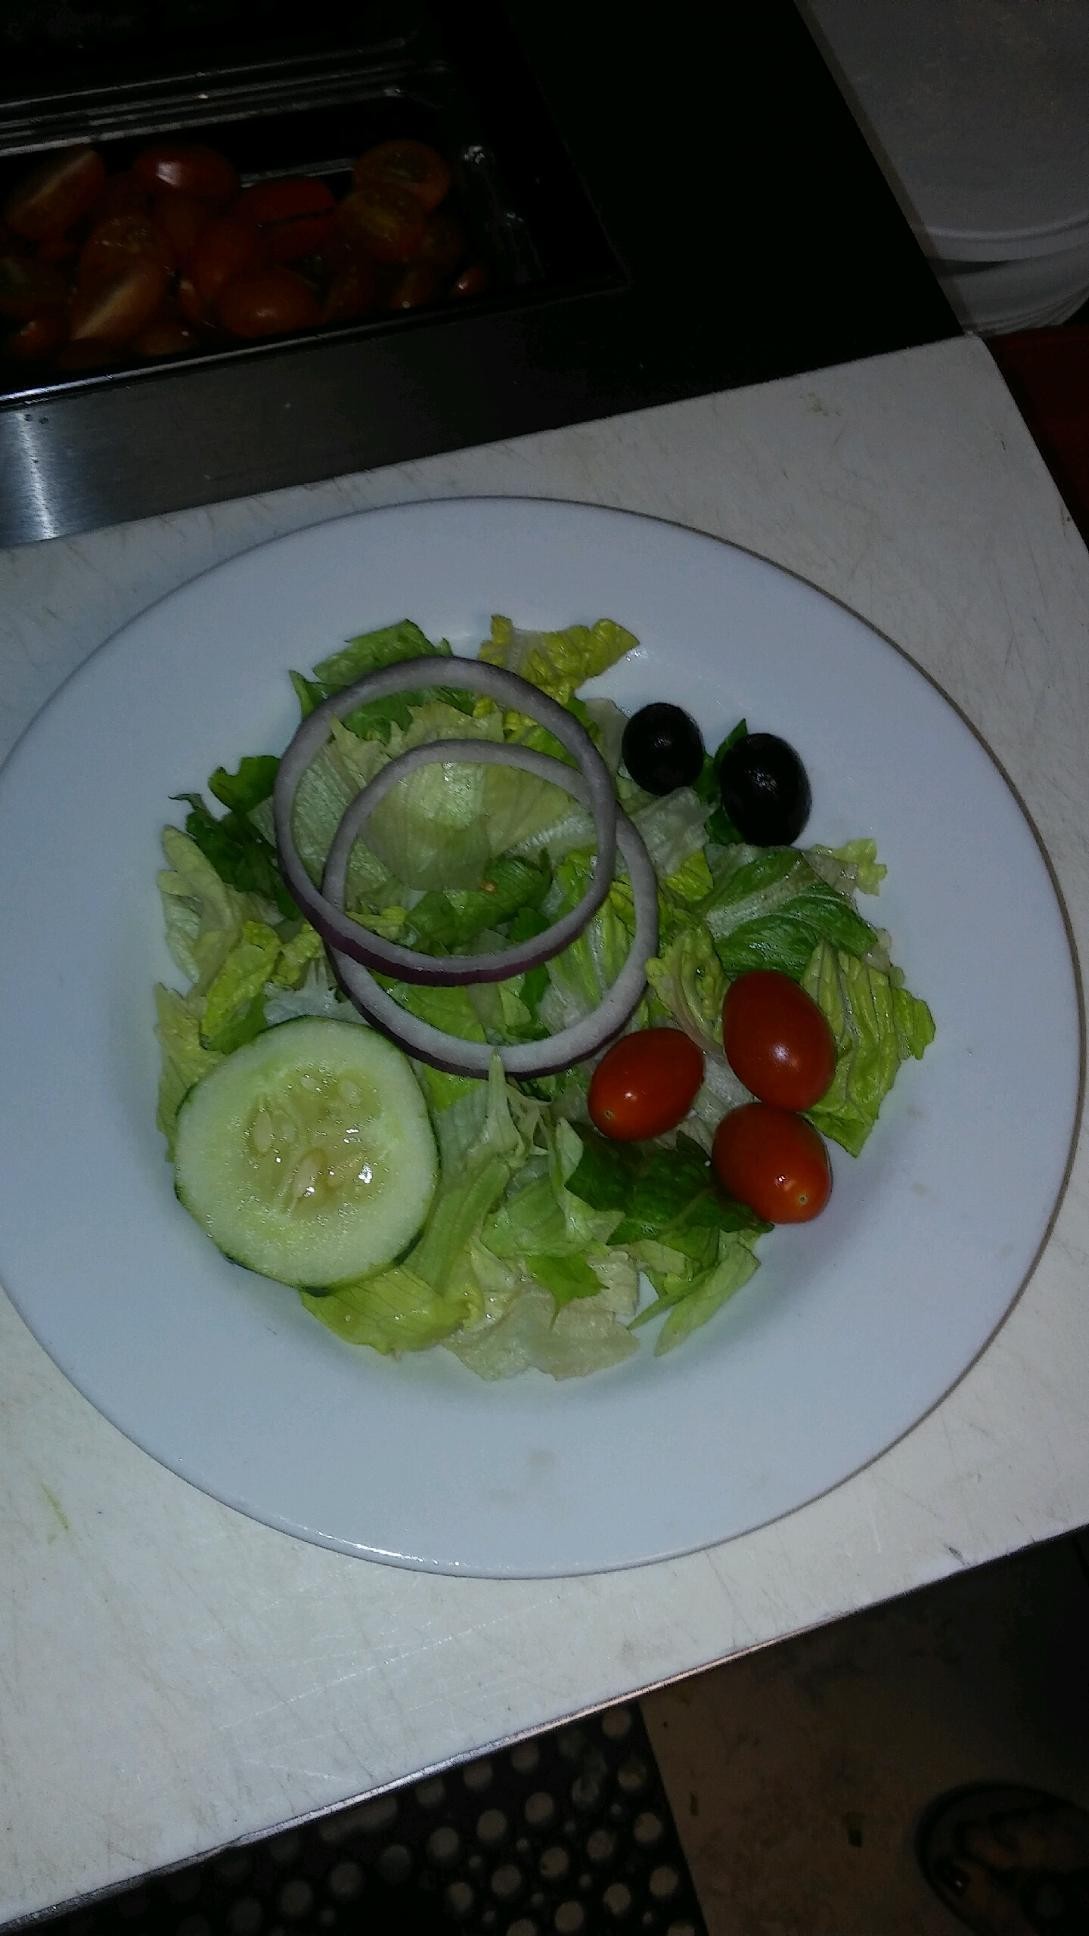 3.99 House Salad